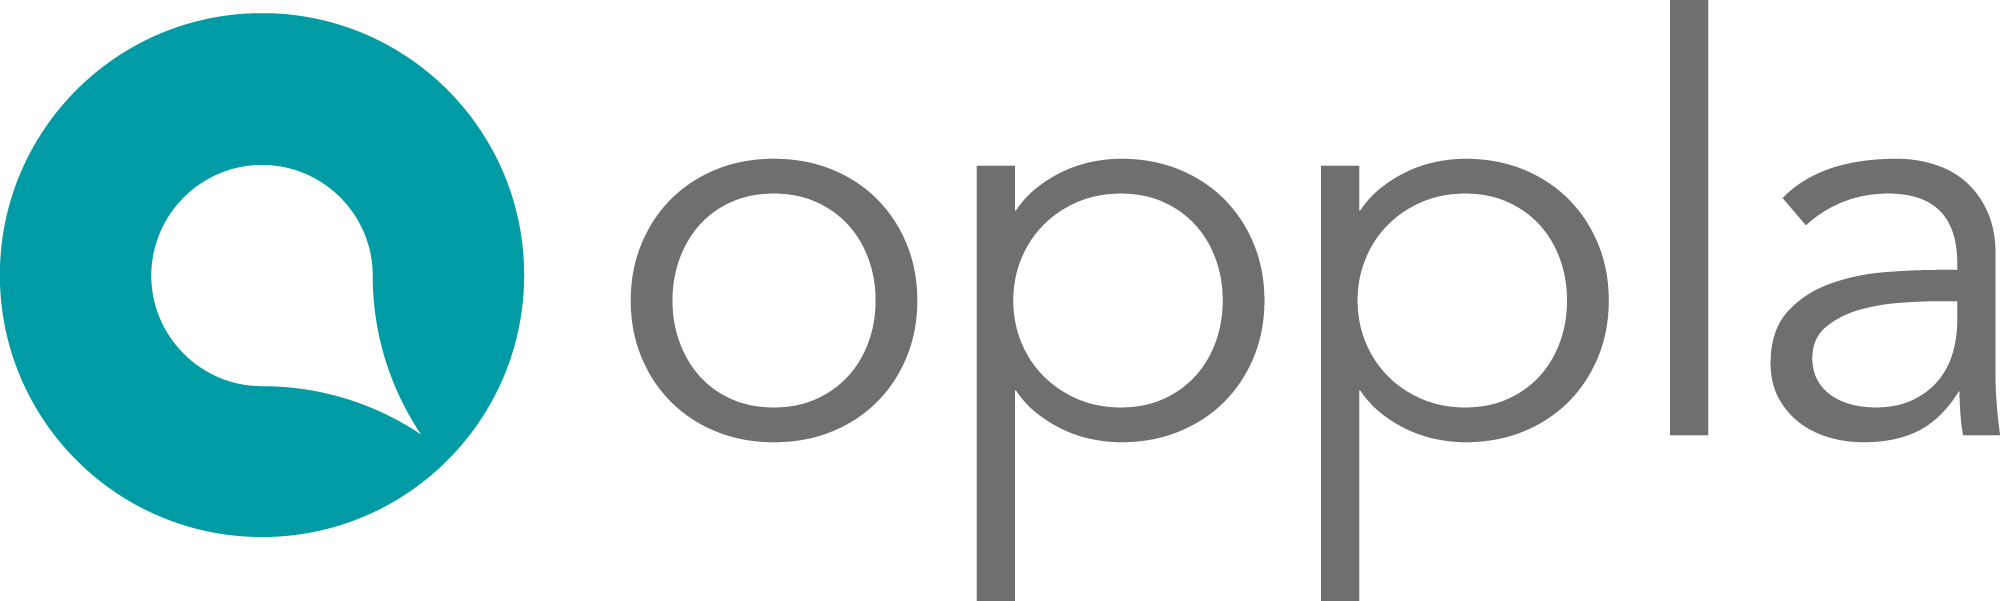 oppla logo rgb 2000px